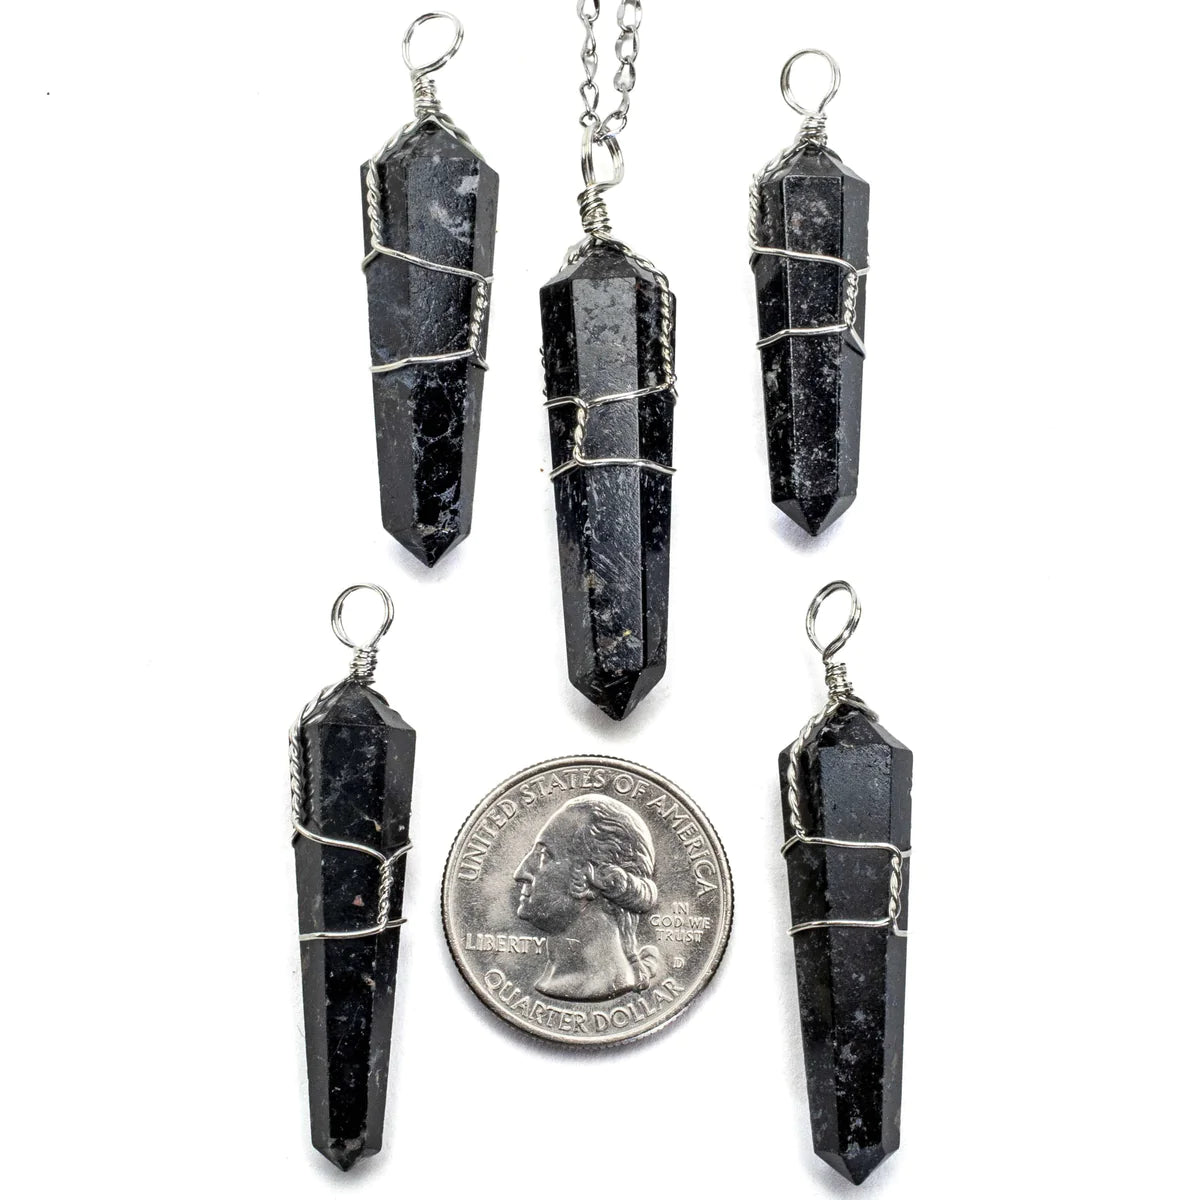 Black Tourmaline Point Healing Stone Pendant Necklace